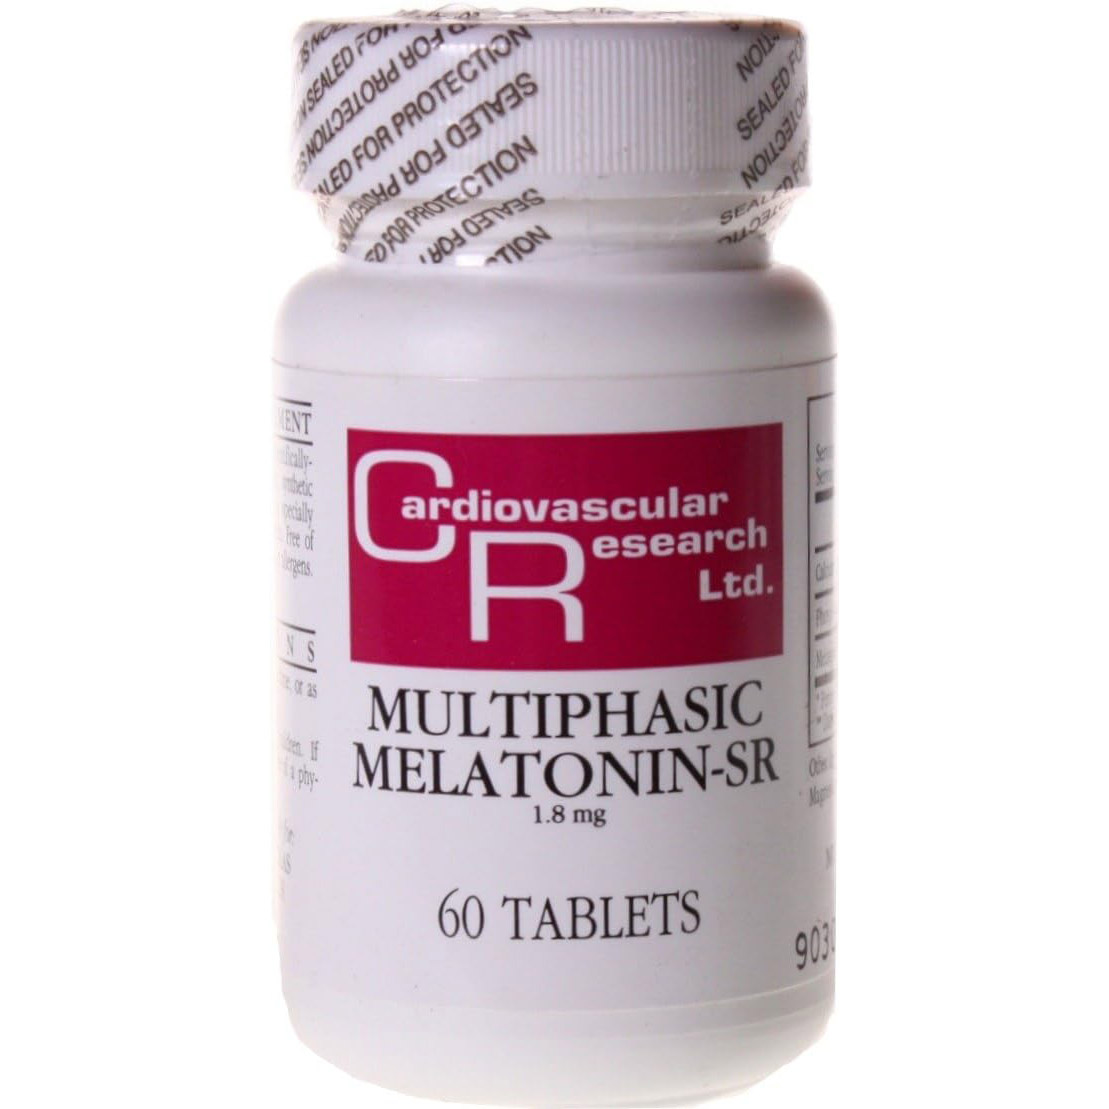 Мультифазный мелатонин-SR Cardiovascular Research, 1,8 мг, 60 таблеток kal мелатонин sr с витамином b6 3 мг 60 таблеток